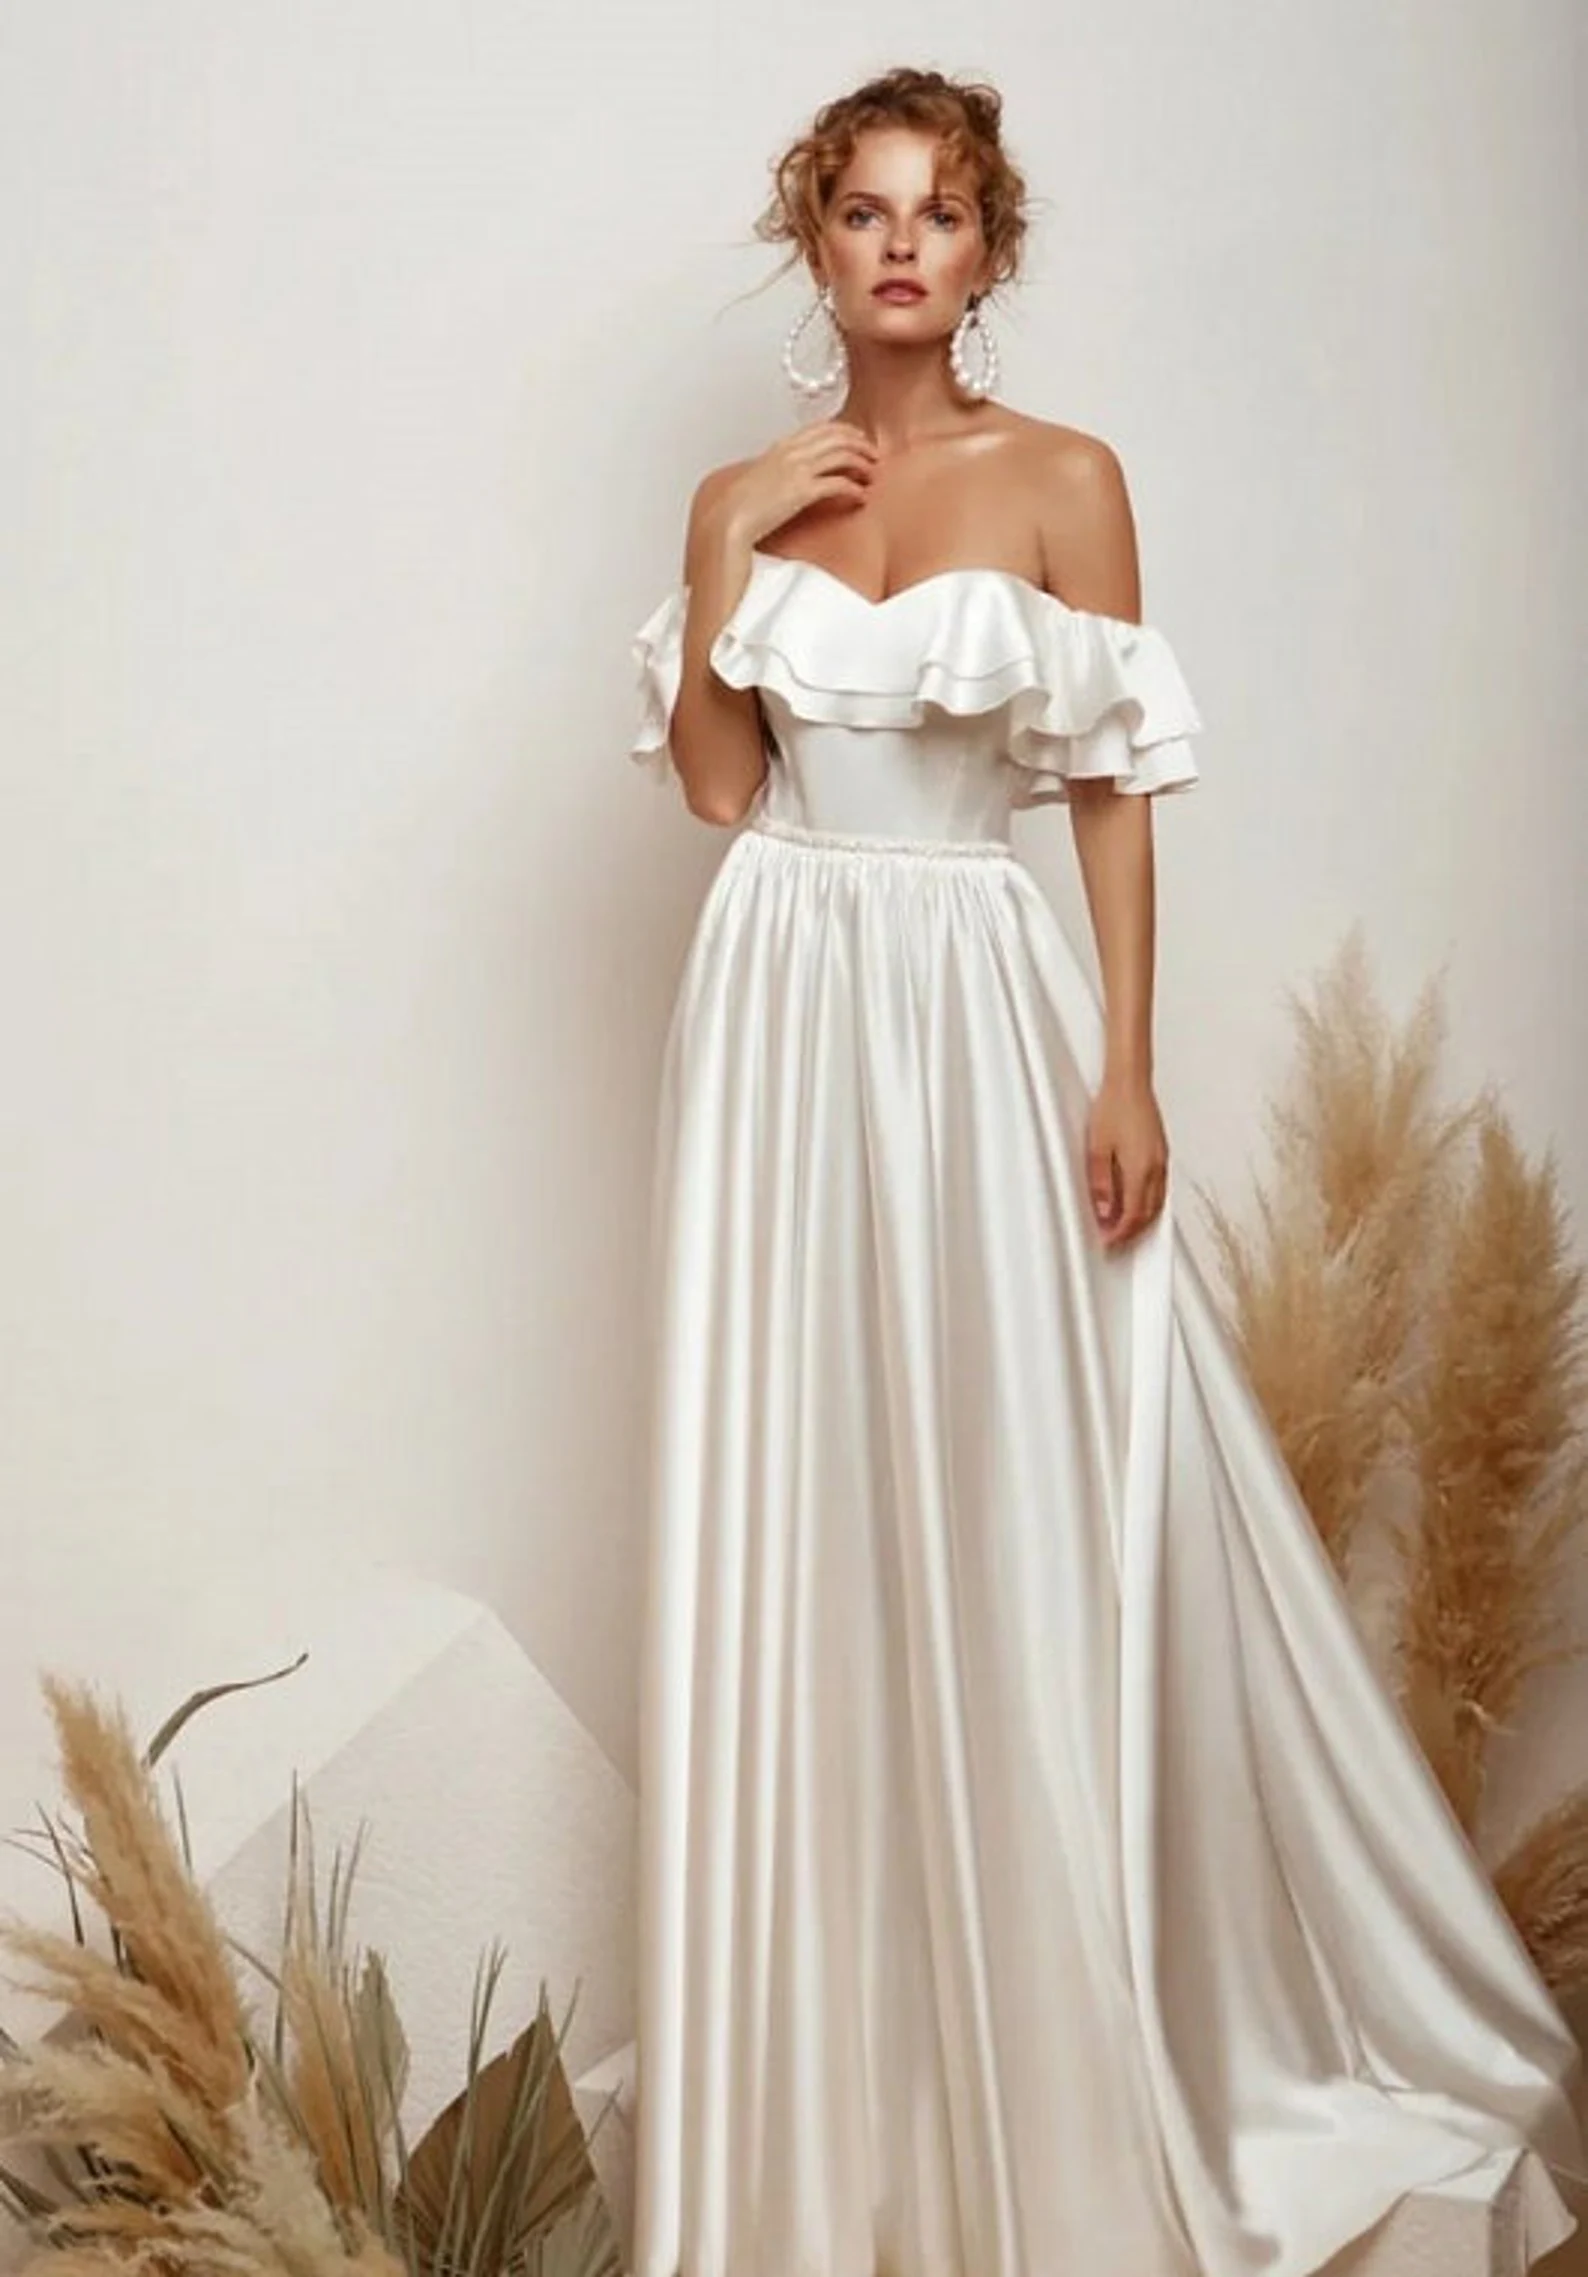 Boho ALine Off The Shoulder Open Back Sleeveless Strapless Exposed Shoulders Wedding Dress